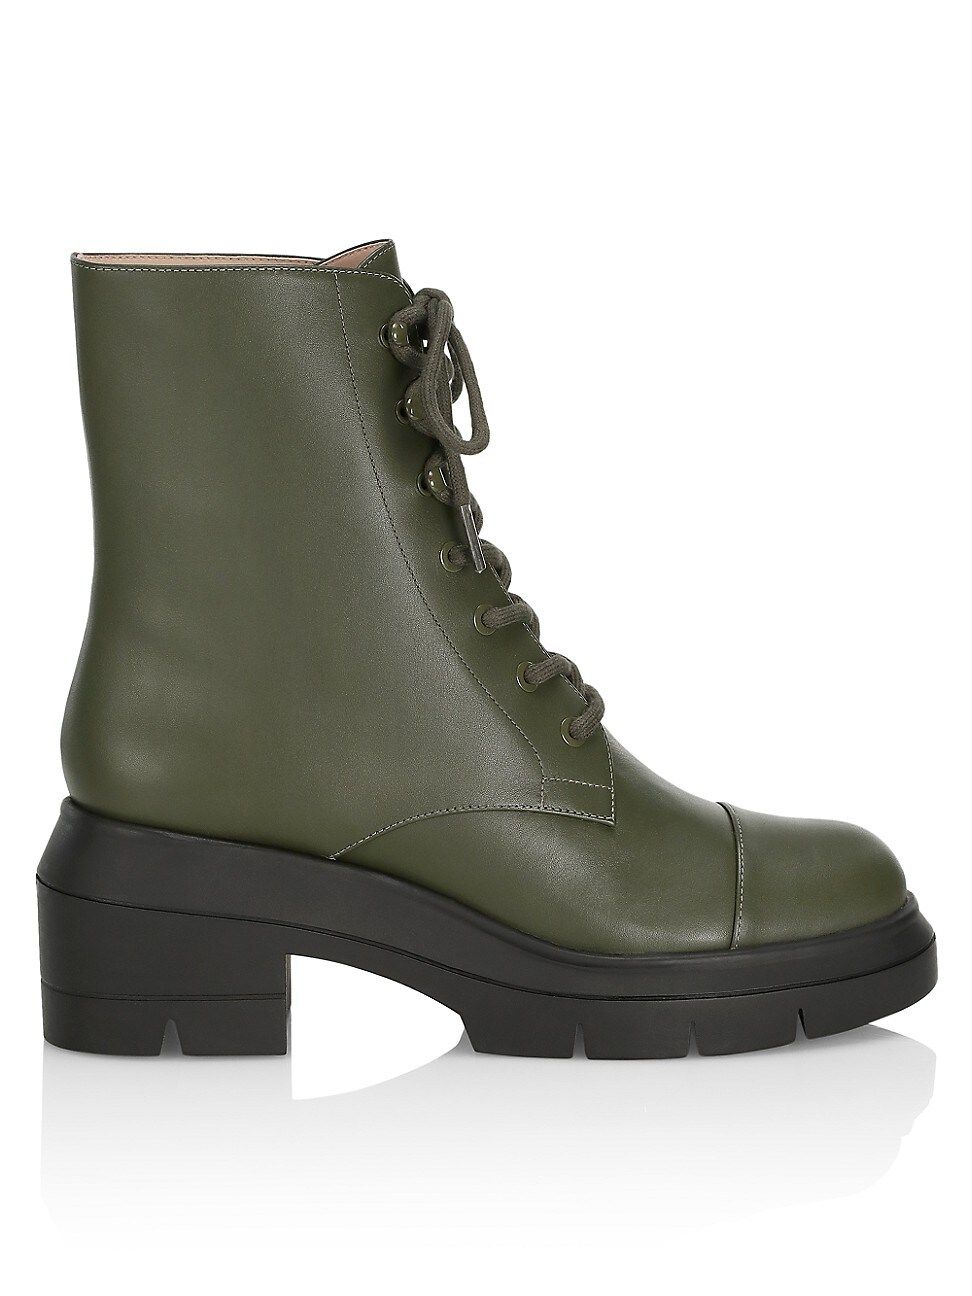 Stuart Weitzman Nisha Leather Lug-Sole Boots | Saks Fifth Avenue